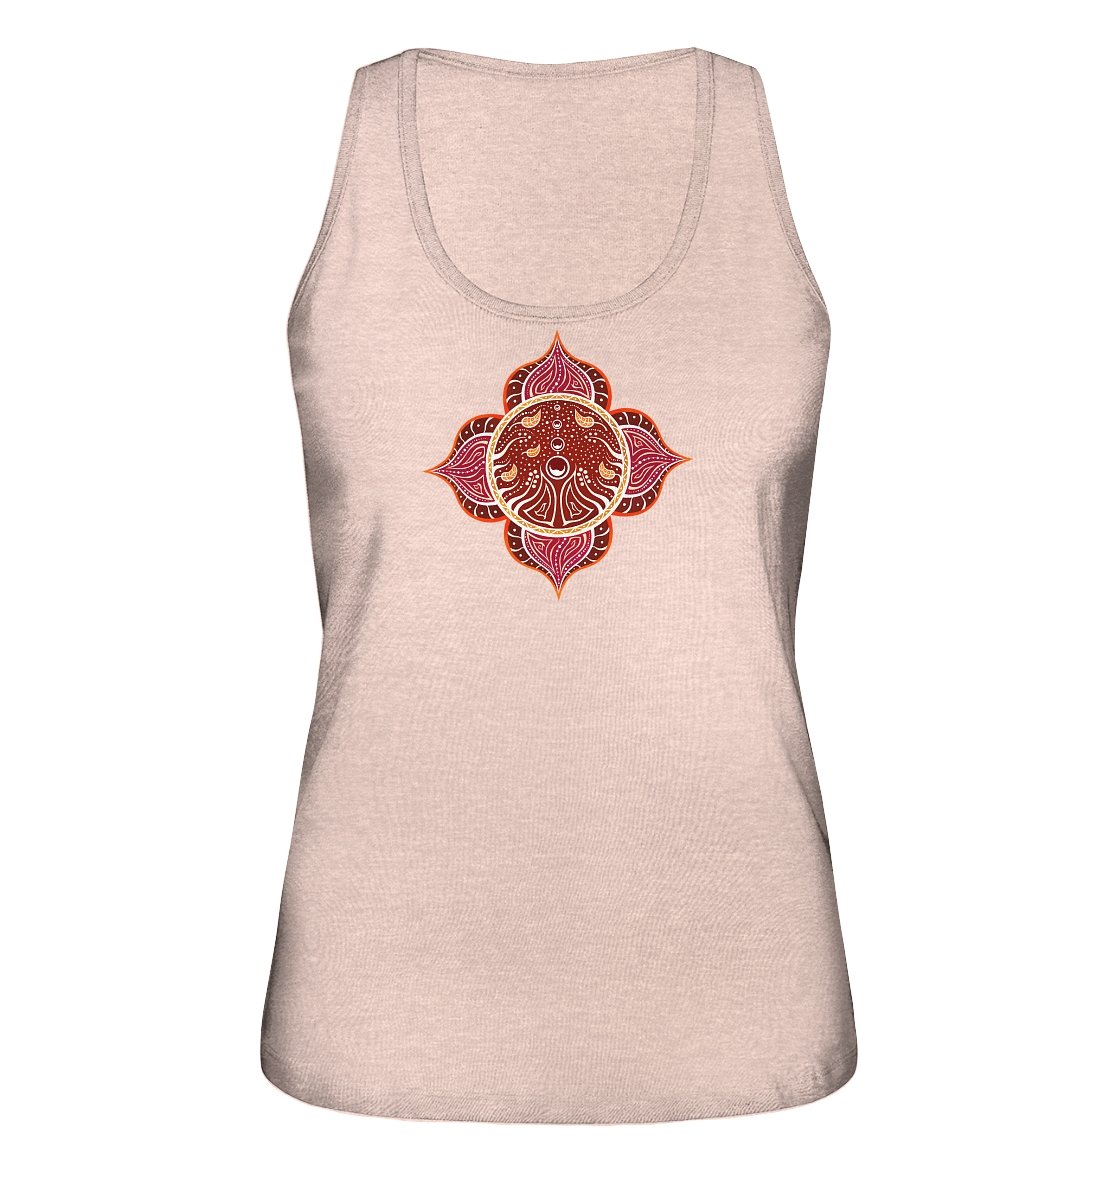 Chakras Yoga Tank Tops. Organic Cotton Yoga Shirts for Women